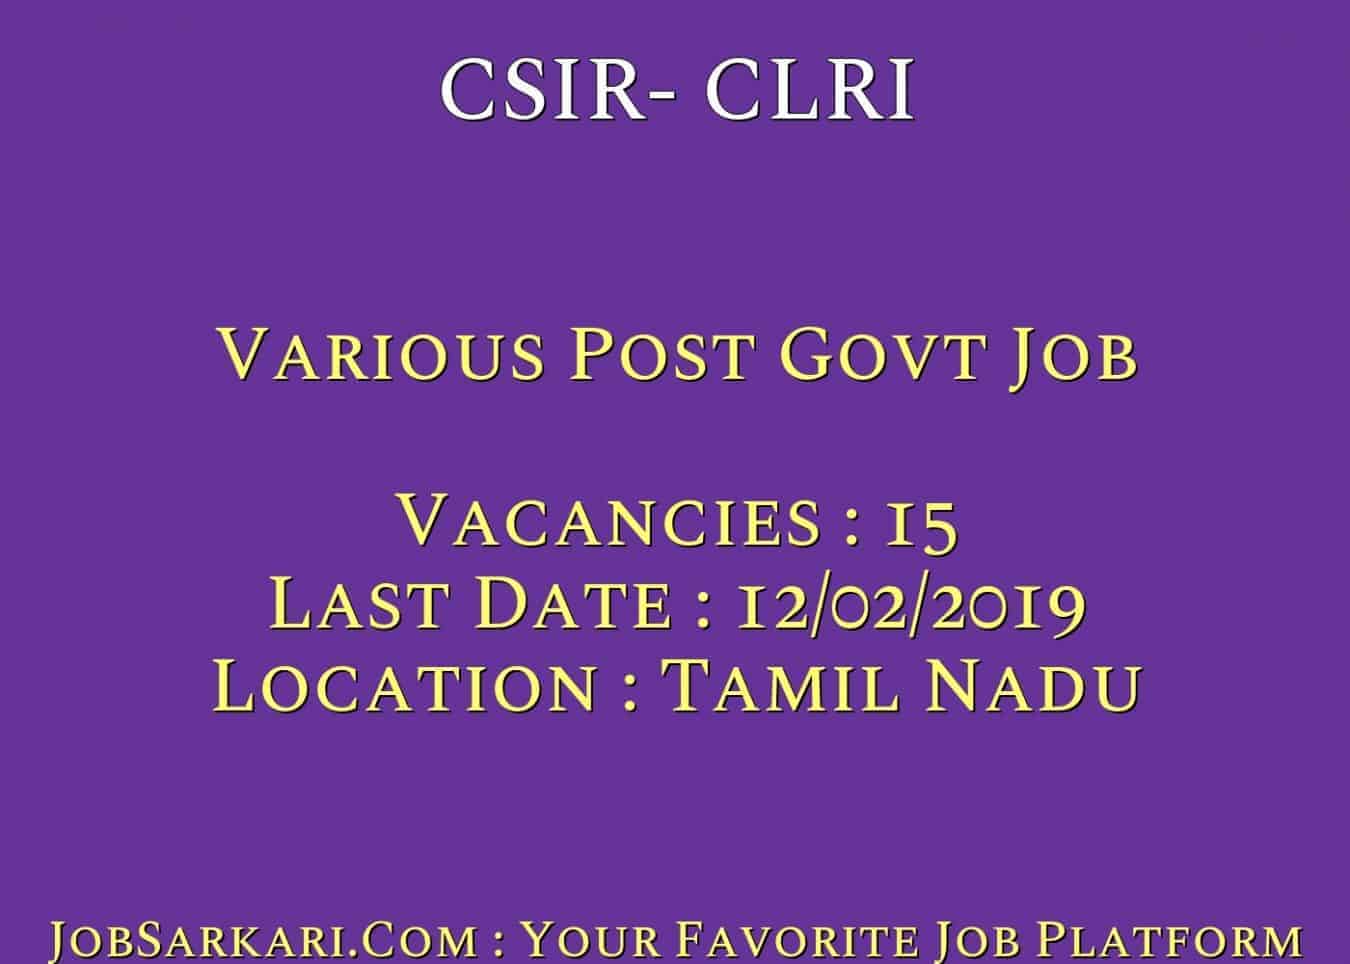 CSIR- CLRI Recruitment 2019 For Various Post Govt Job